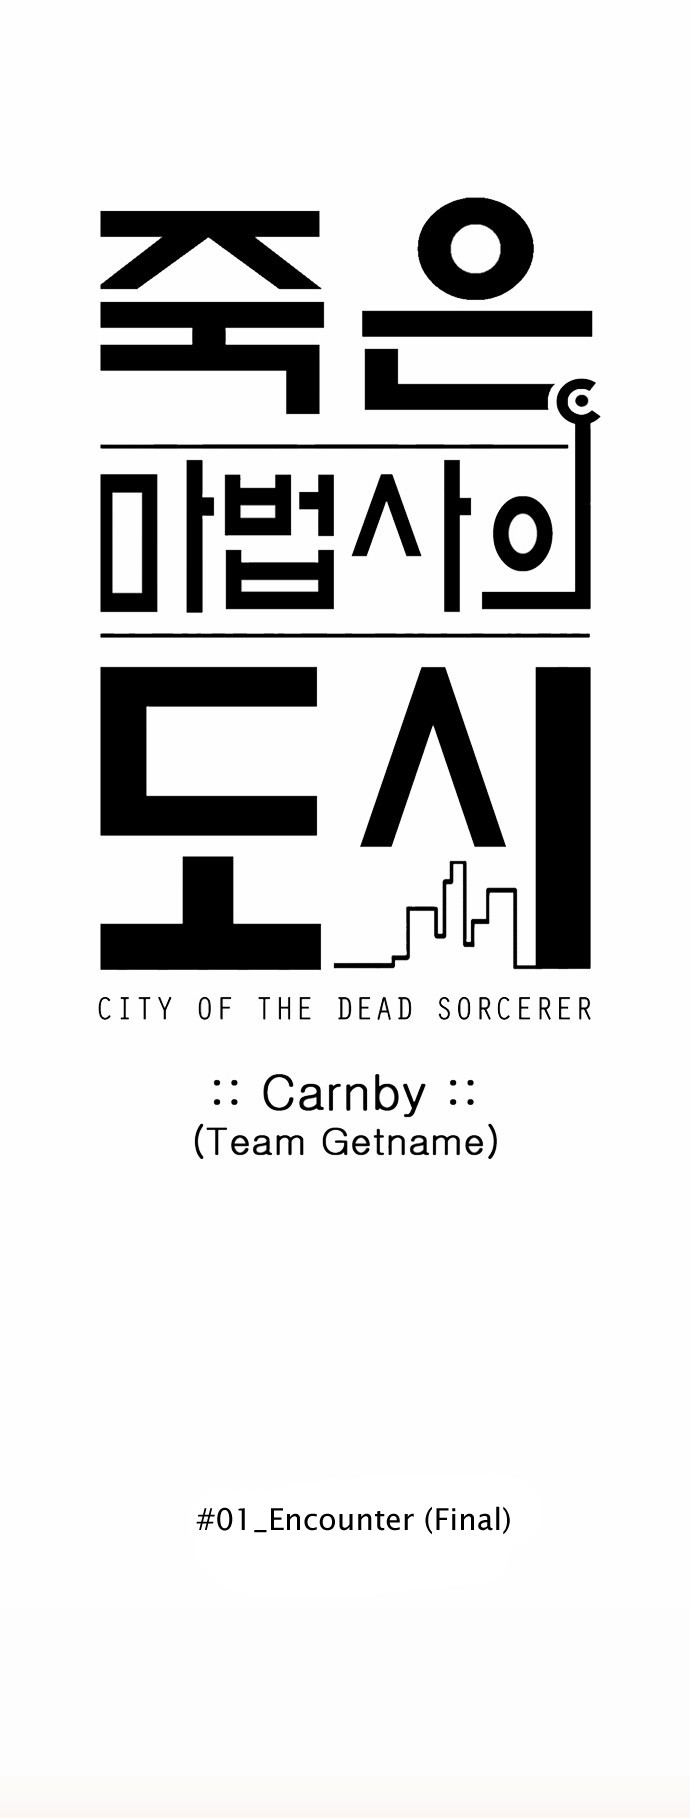 City of the Dead Sorcerer Ch. 12 Encounter (Final)